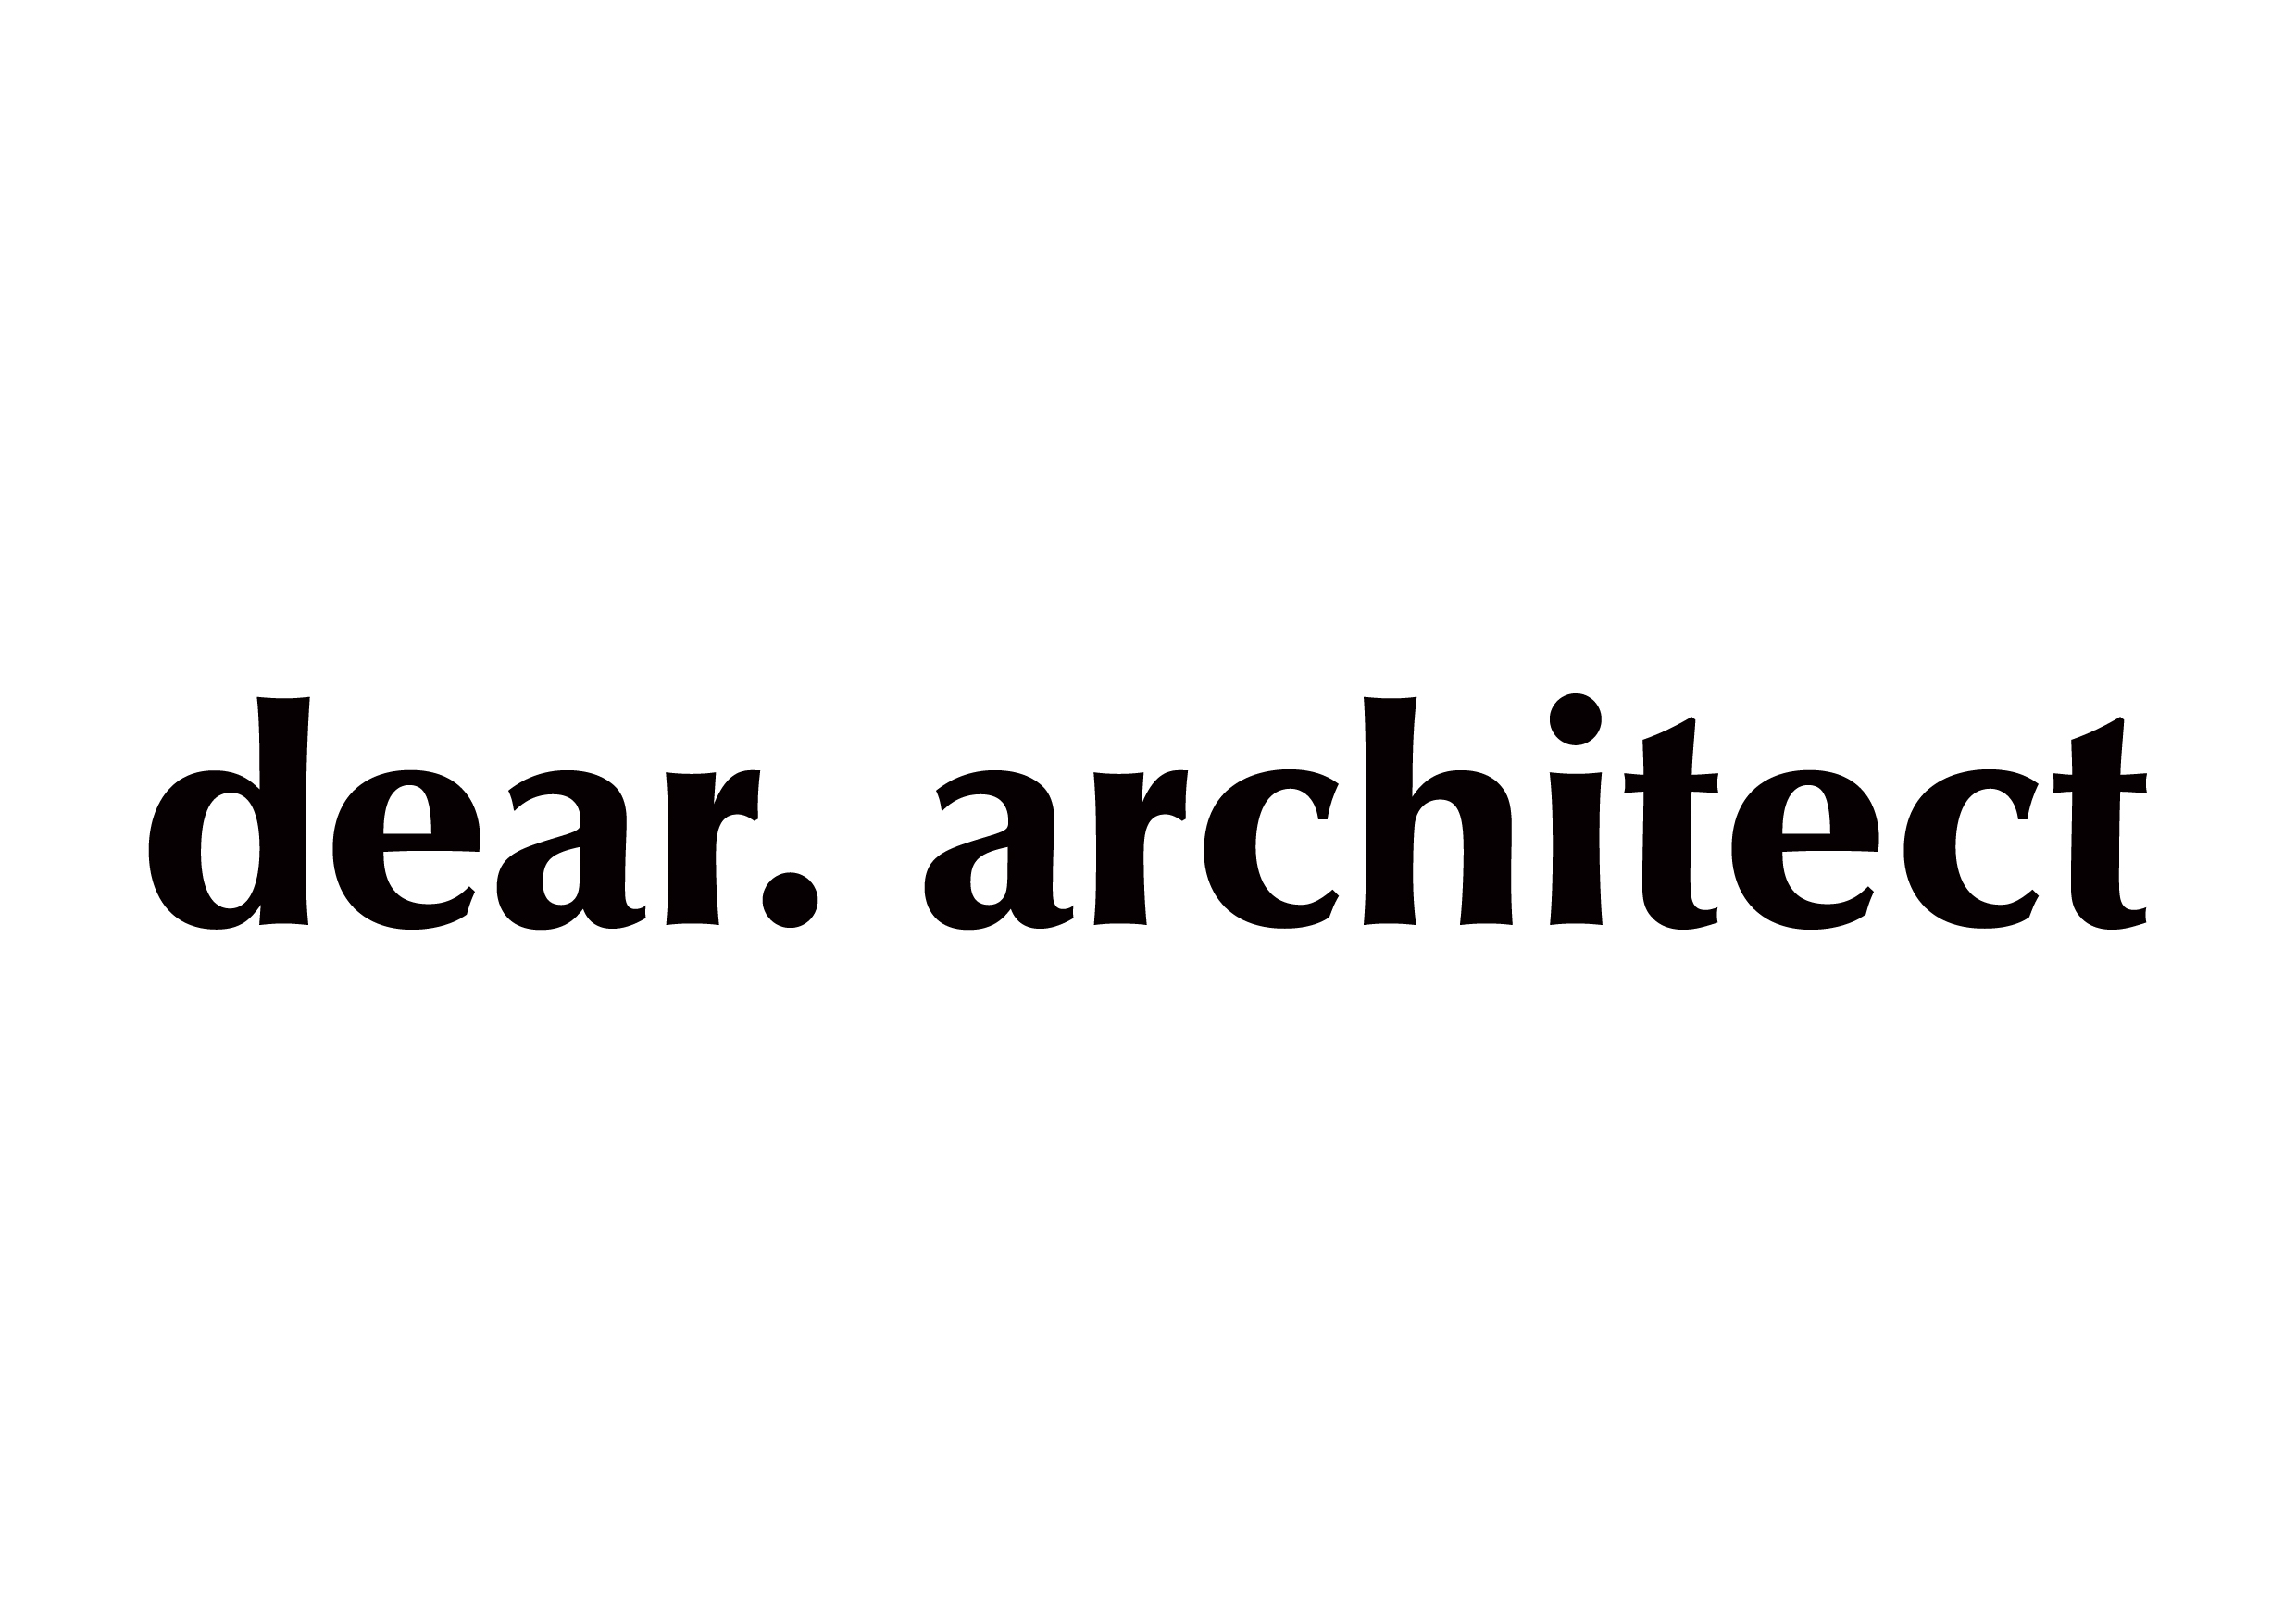 dear architect logo image